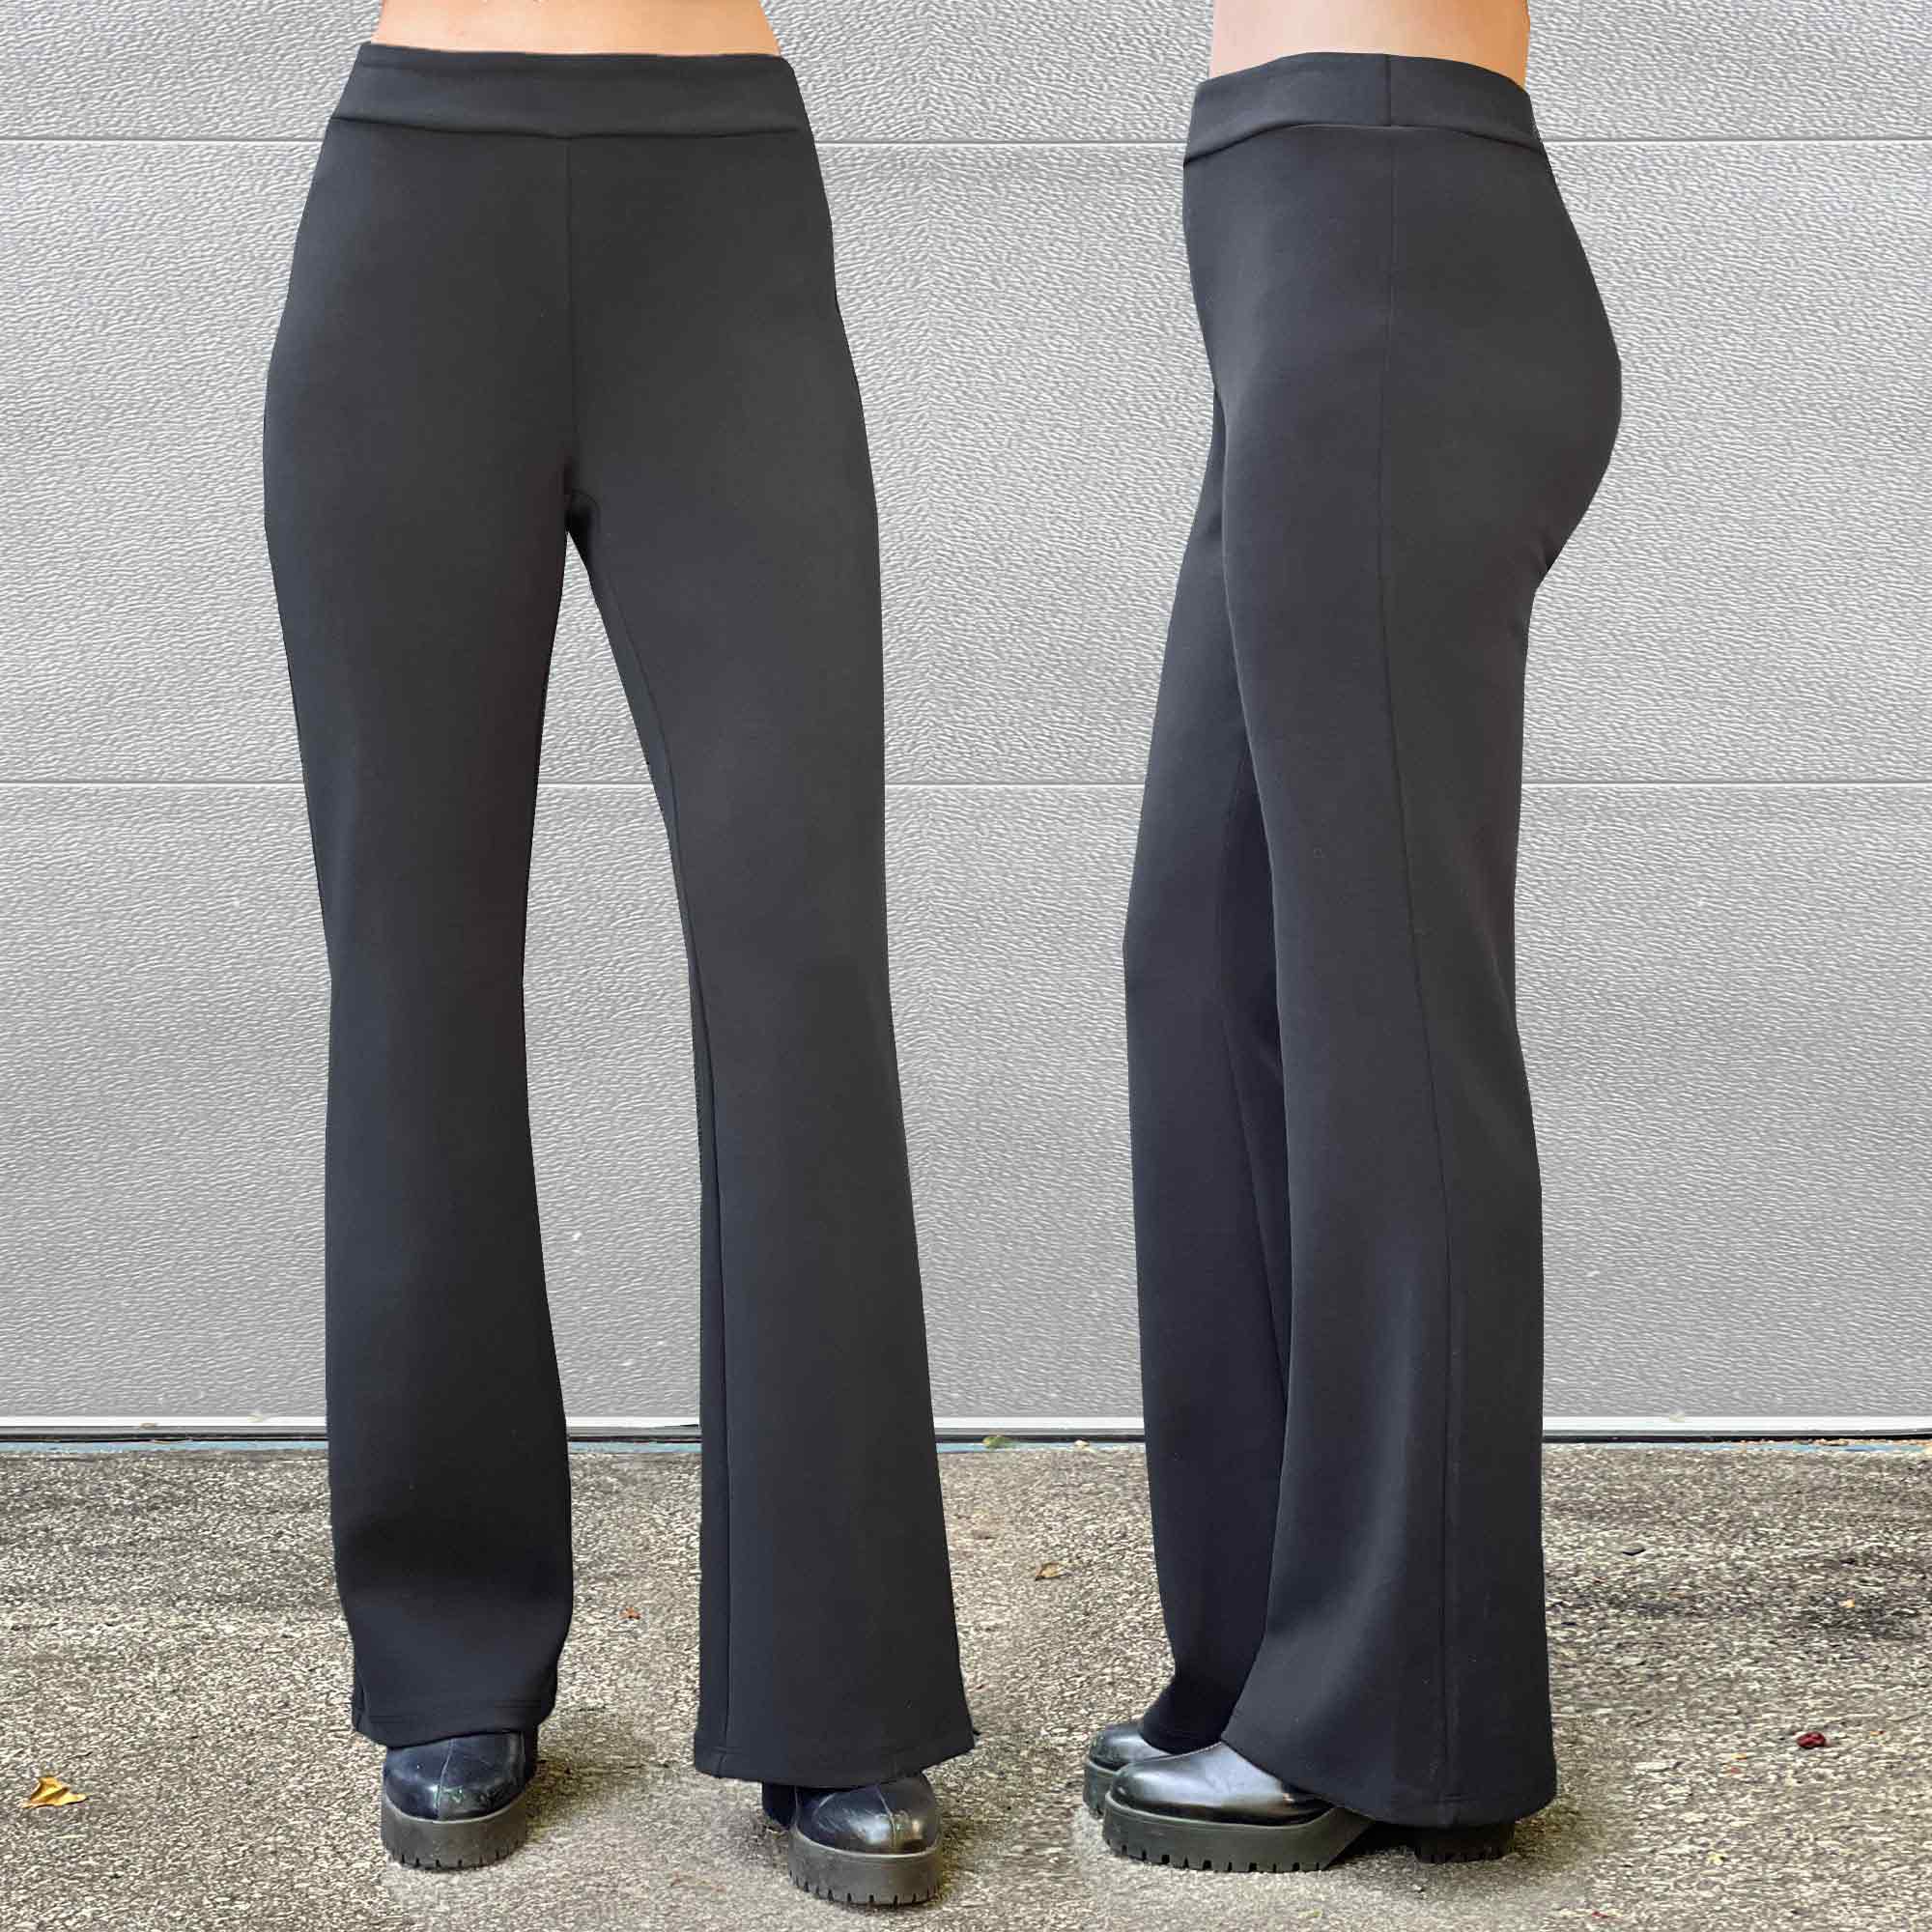 Bamboo Spandex Flare Yoga Pants, Women's Bamboo Clothing